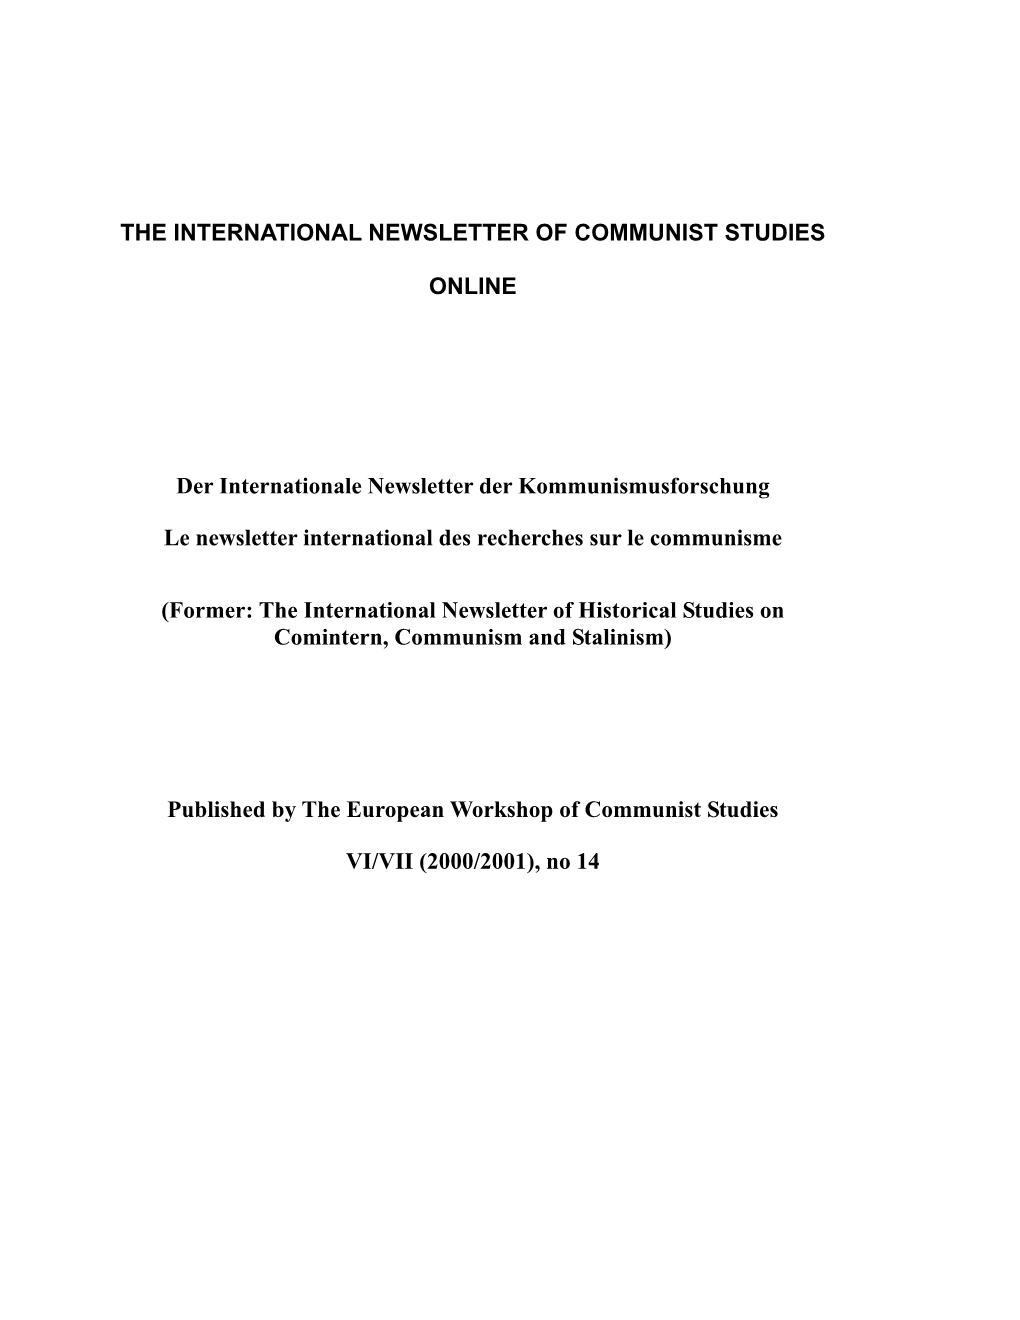 The International Newsletter of Communist Studies